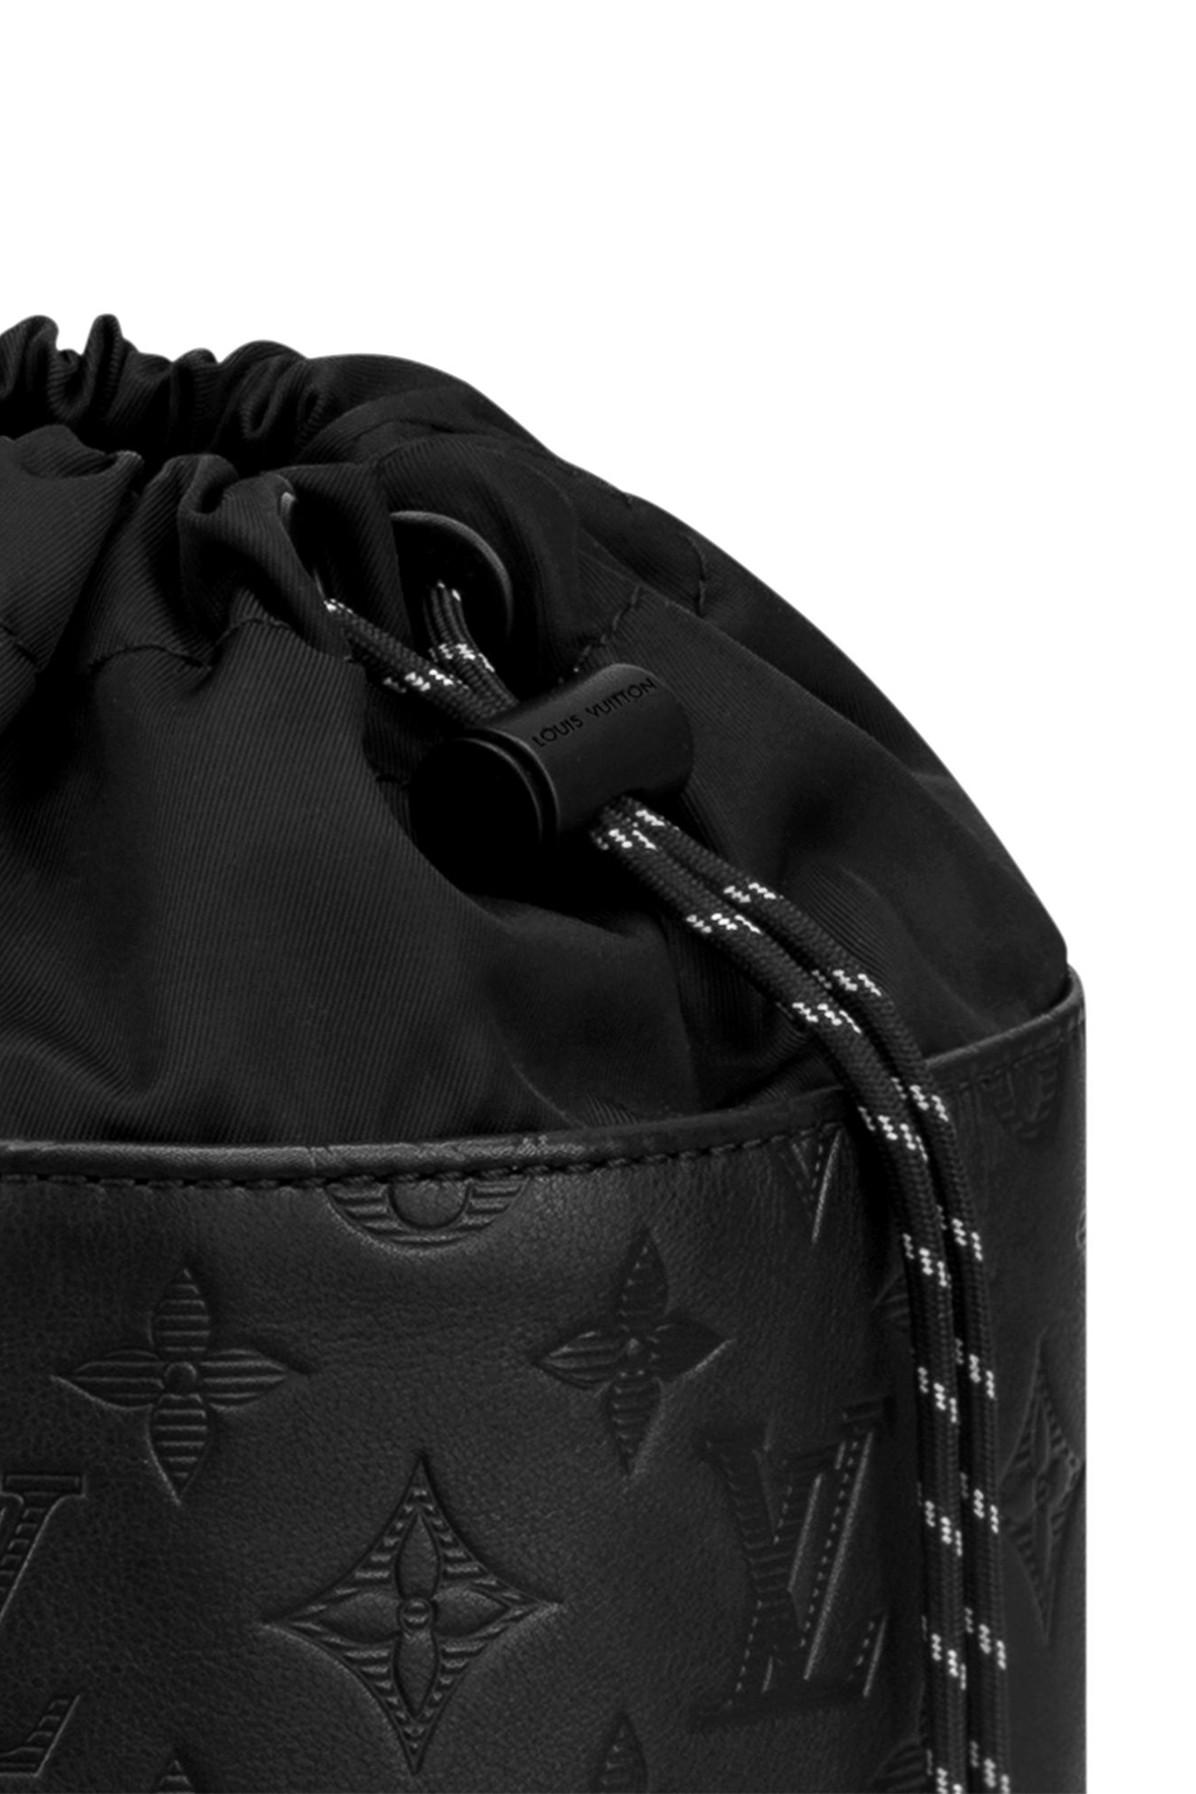 lv monogram sling bag black